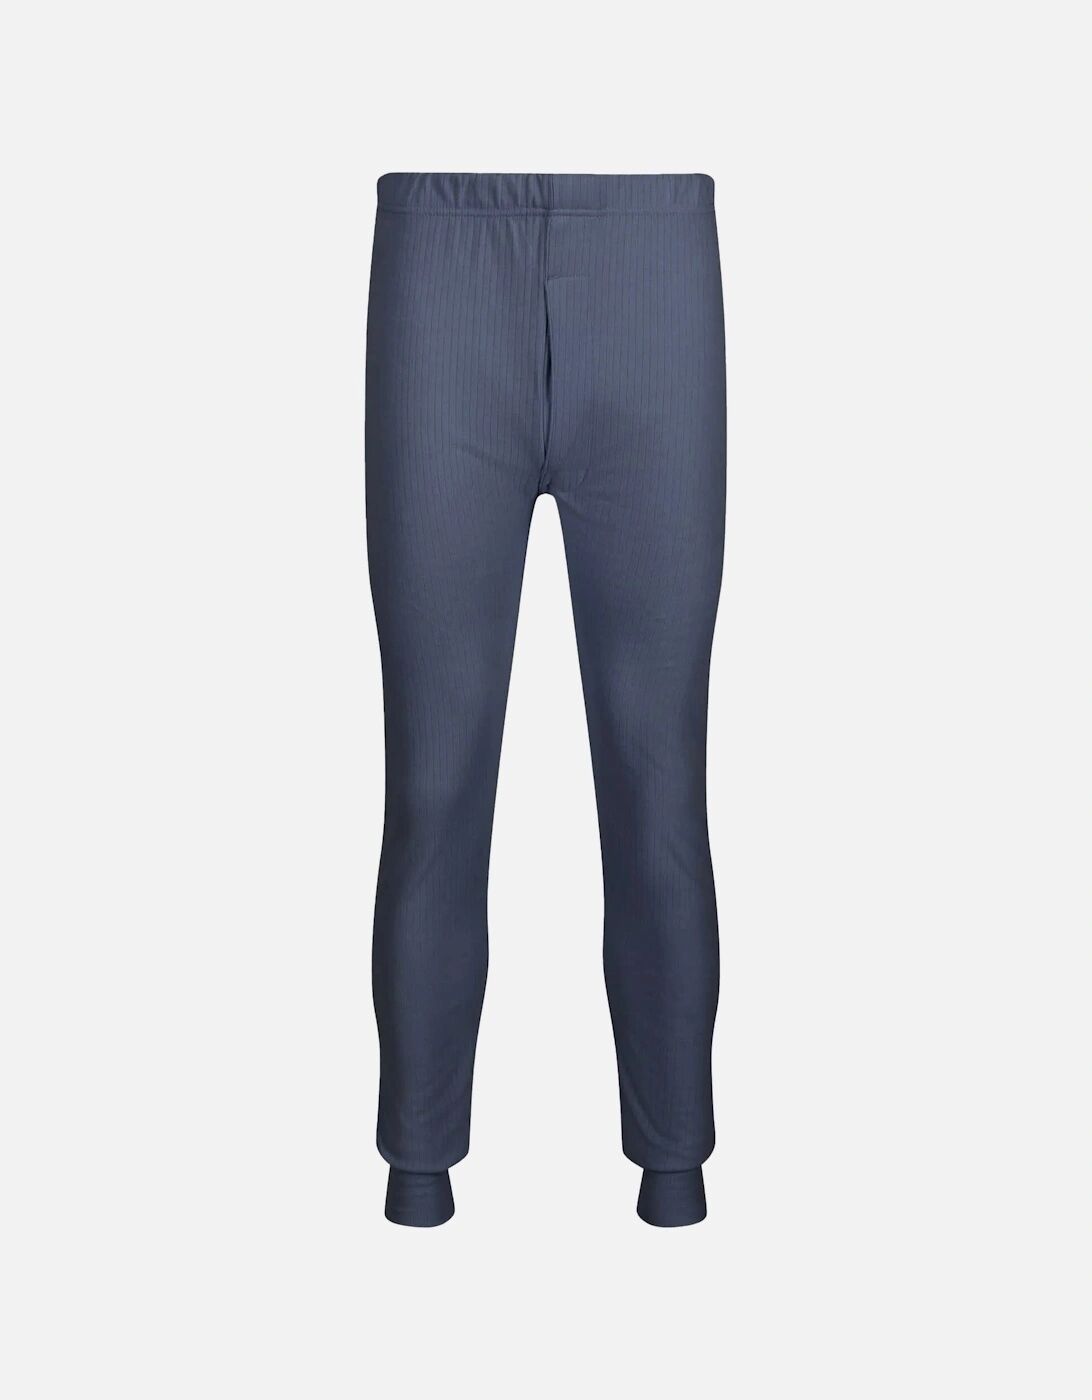 Men's Regatta Mens Thermal Underwear Long Johns - Blue - Size: XXXL